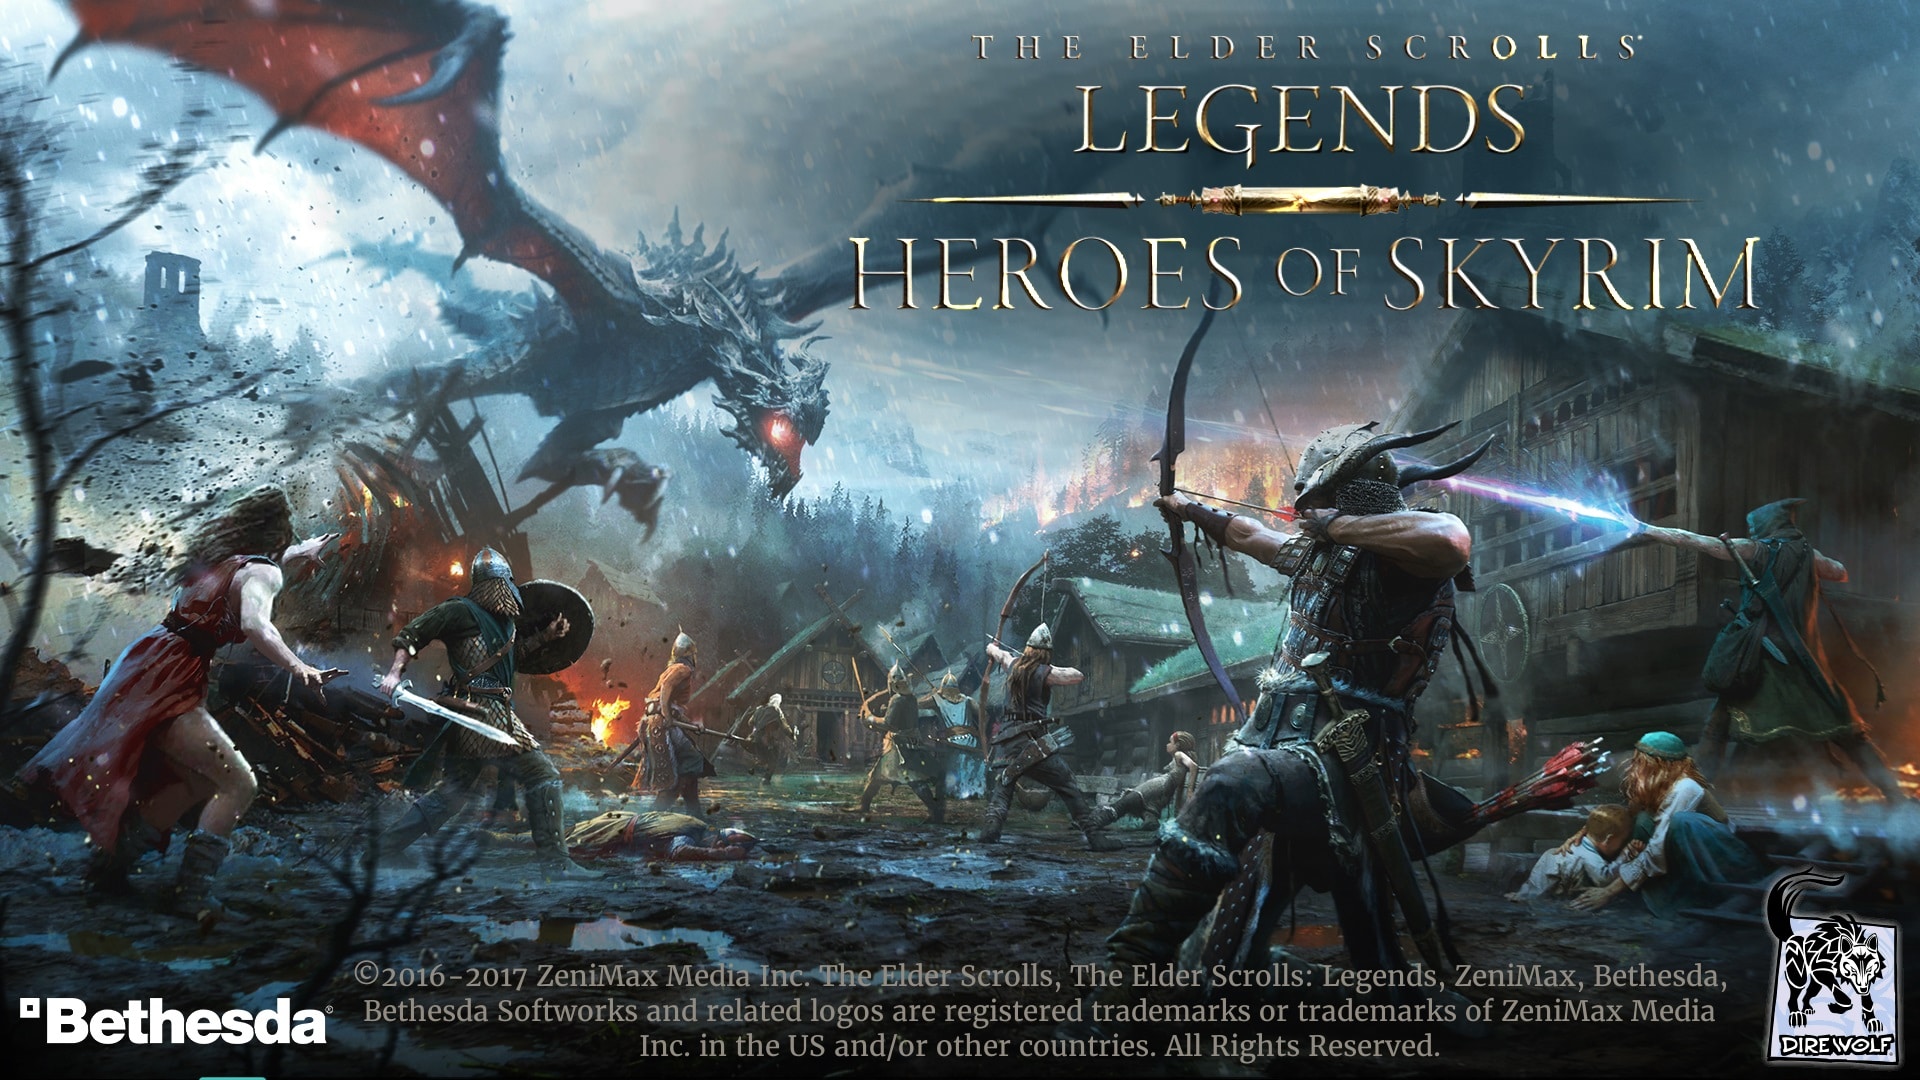 Game Review: The Elder Scrolls: Legends